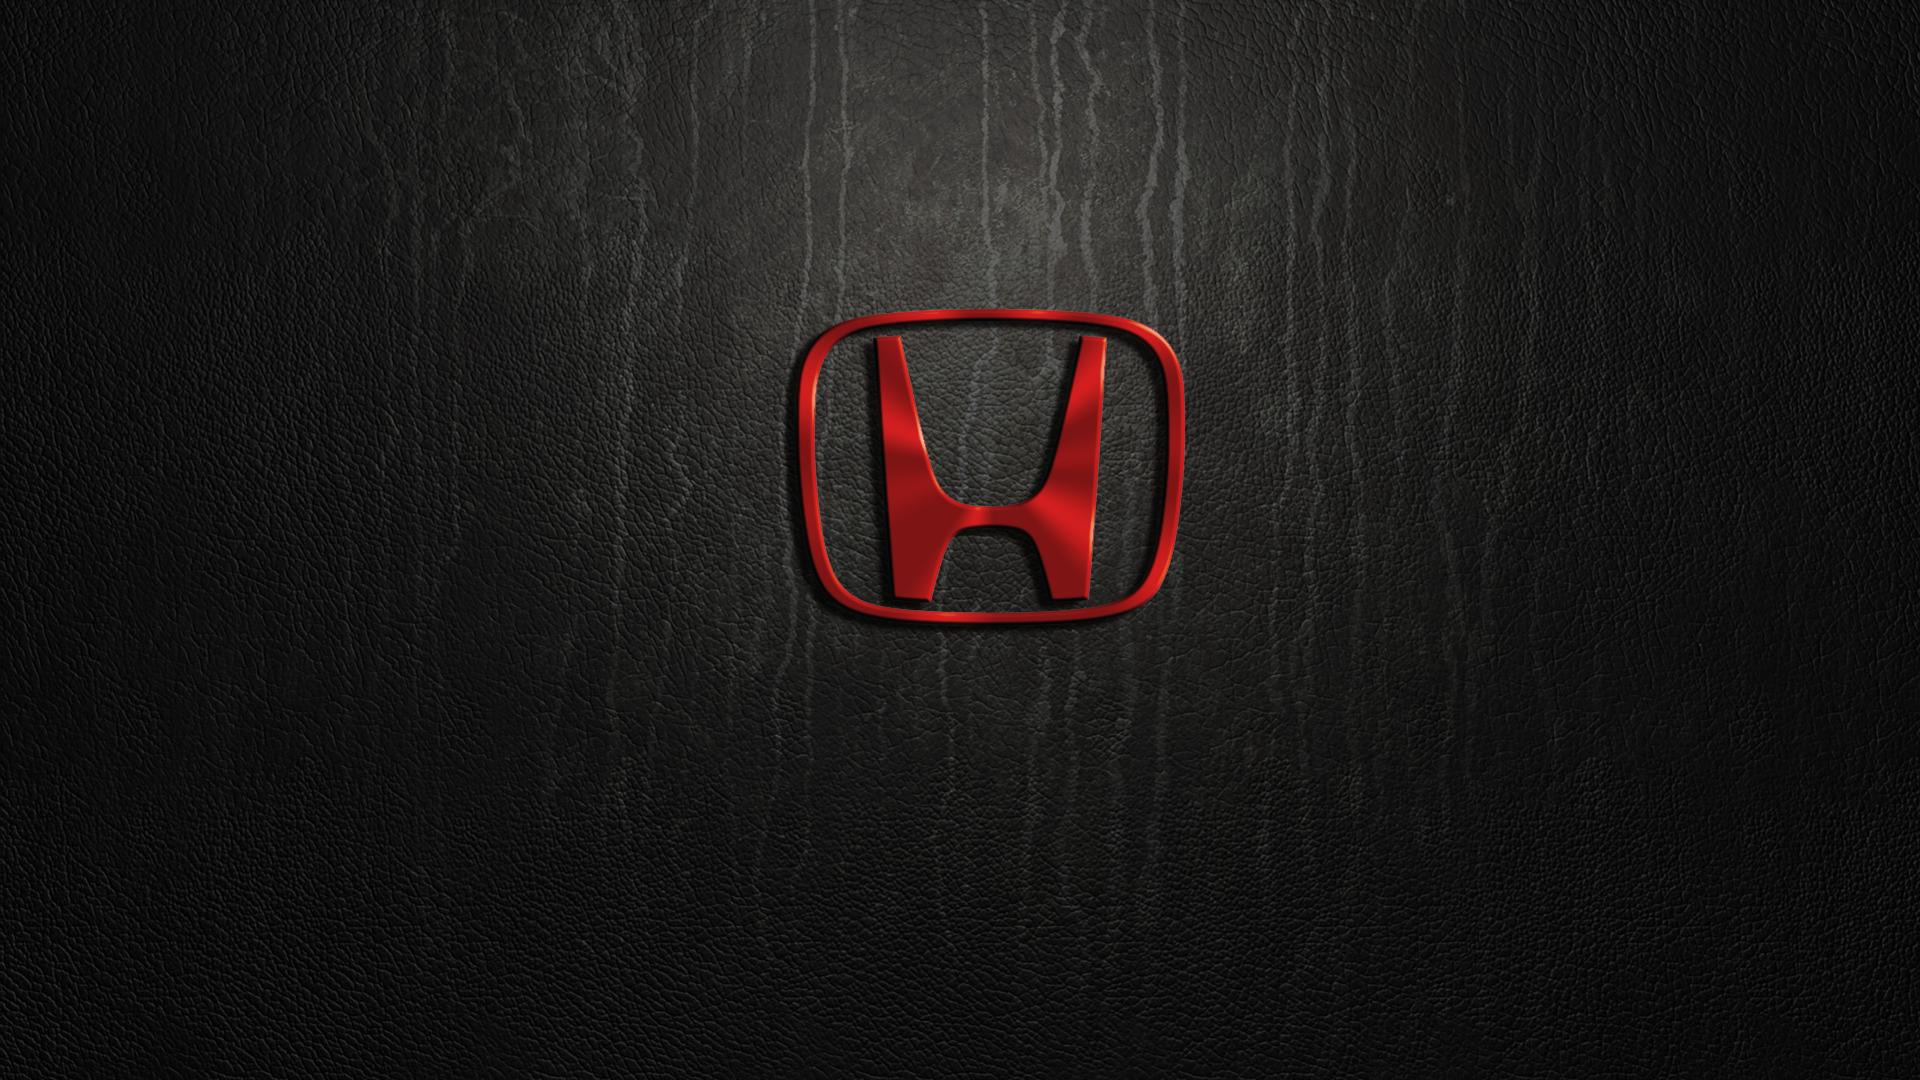 Honda Car Wallpaper Download